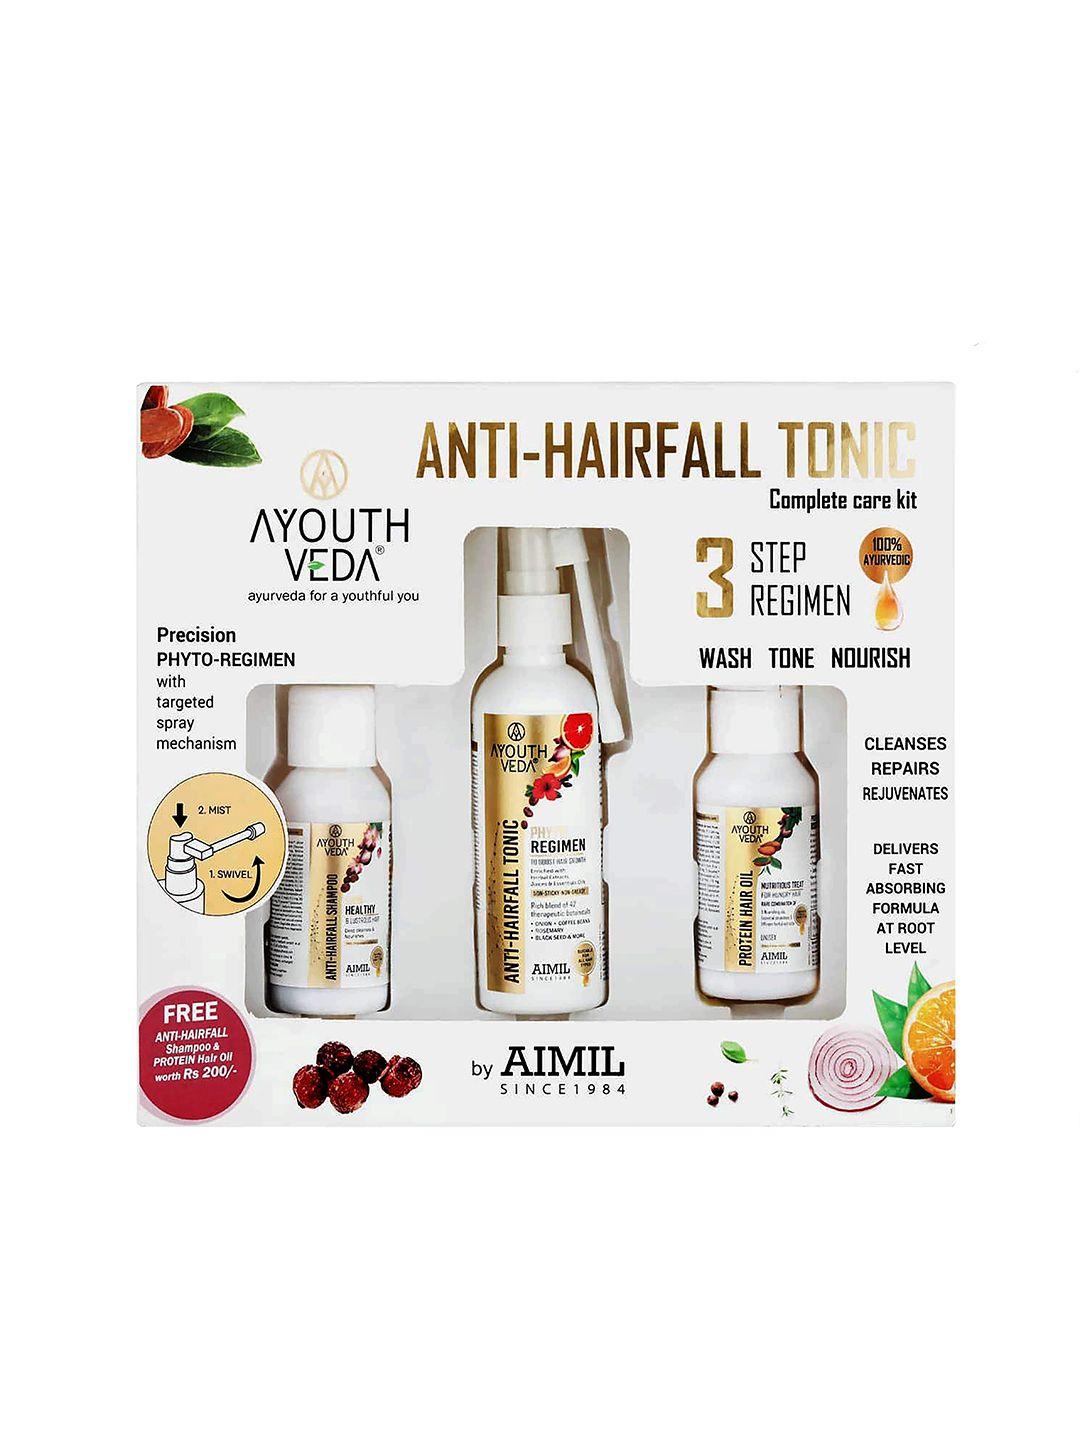 ayouthveda anti-hairfall tonic complete care kit 100ml